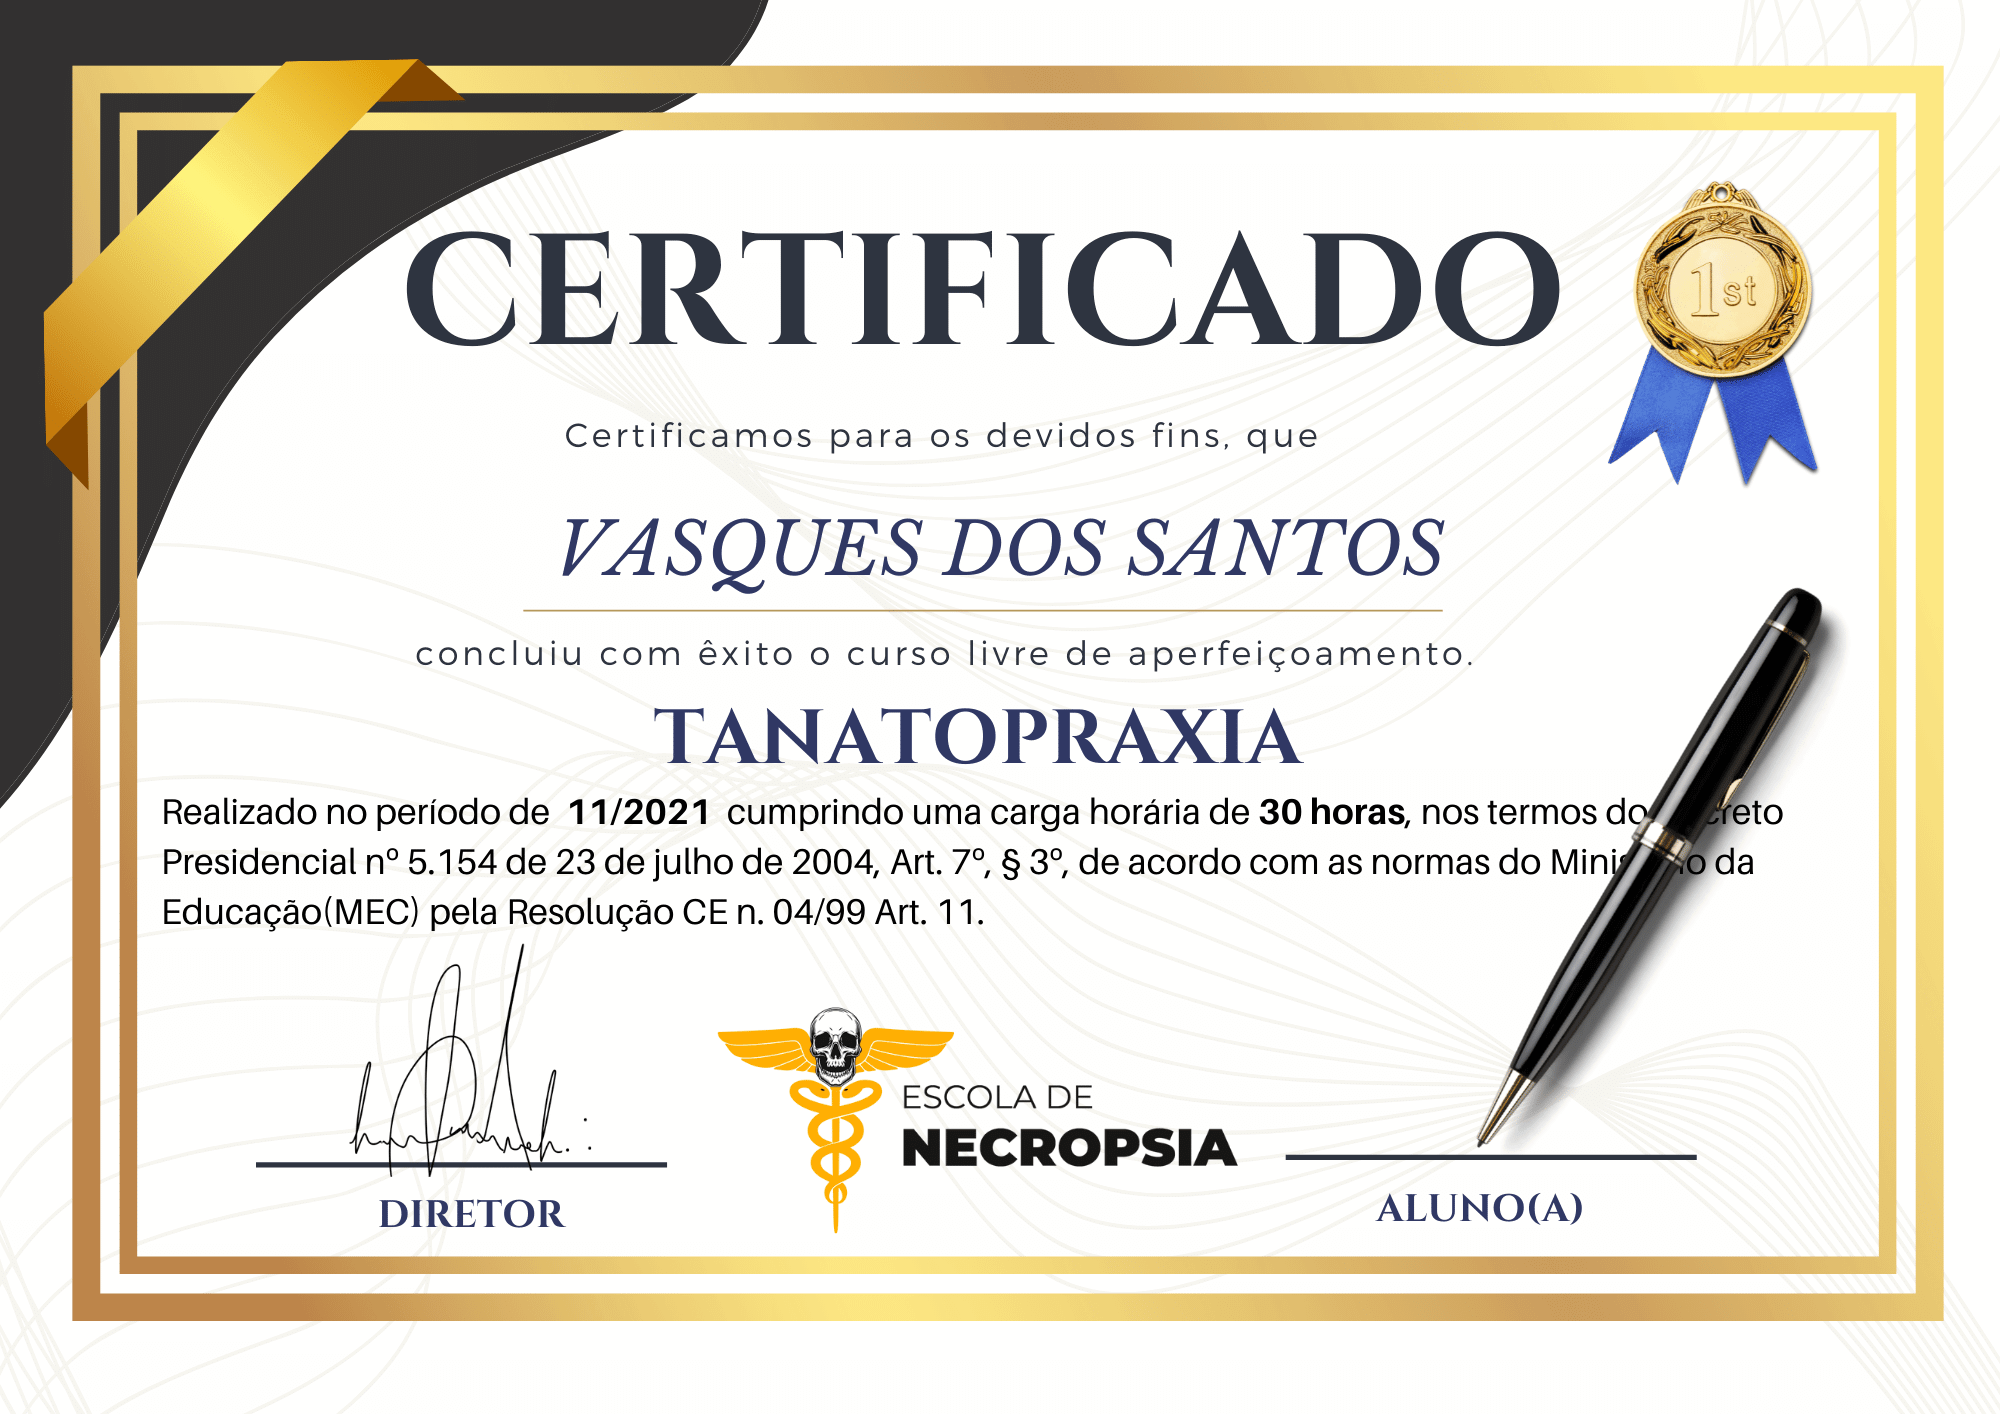 tanatopraxia